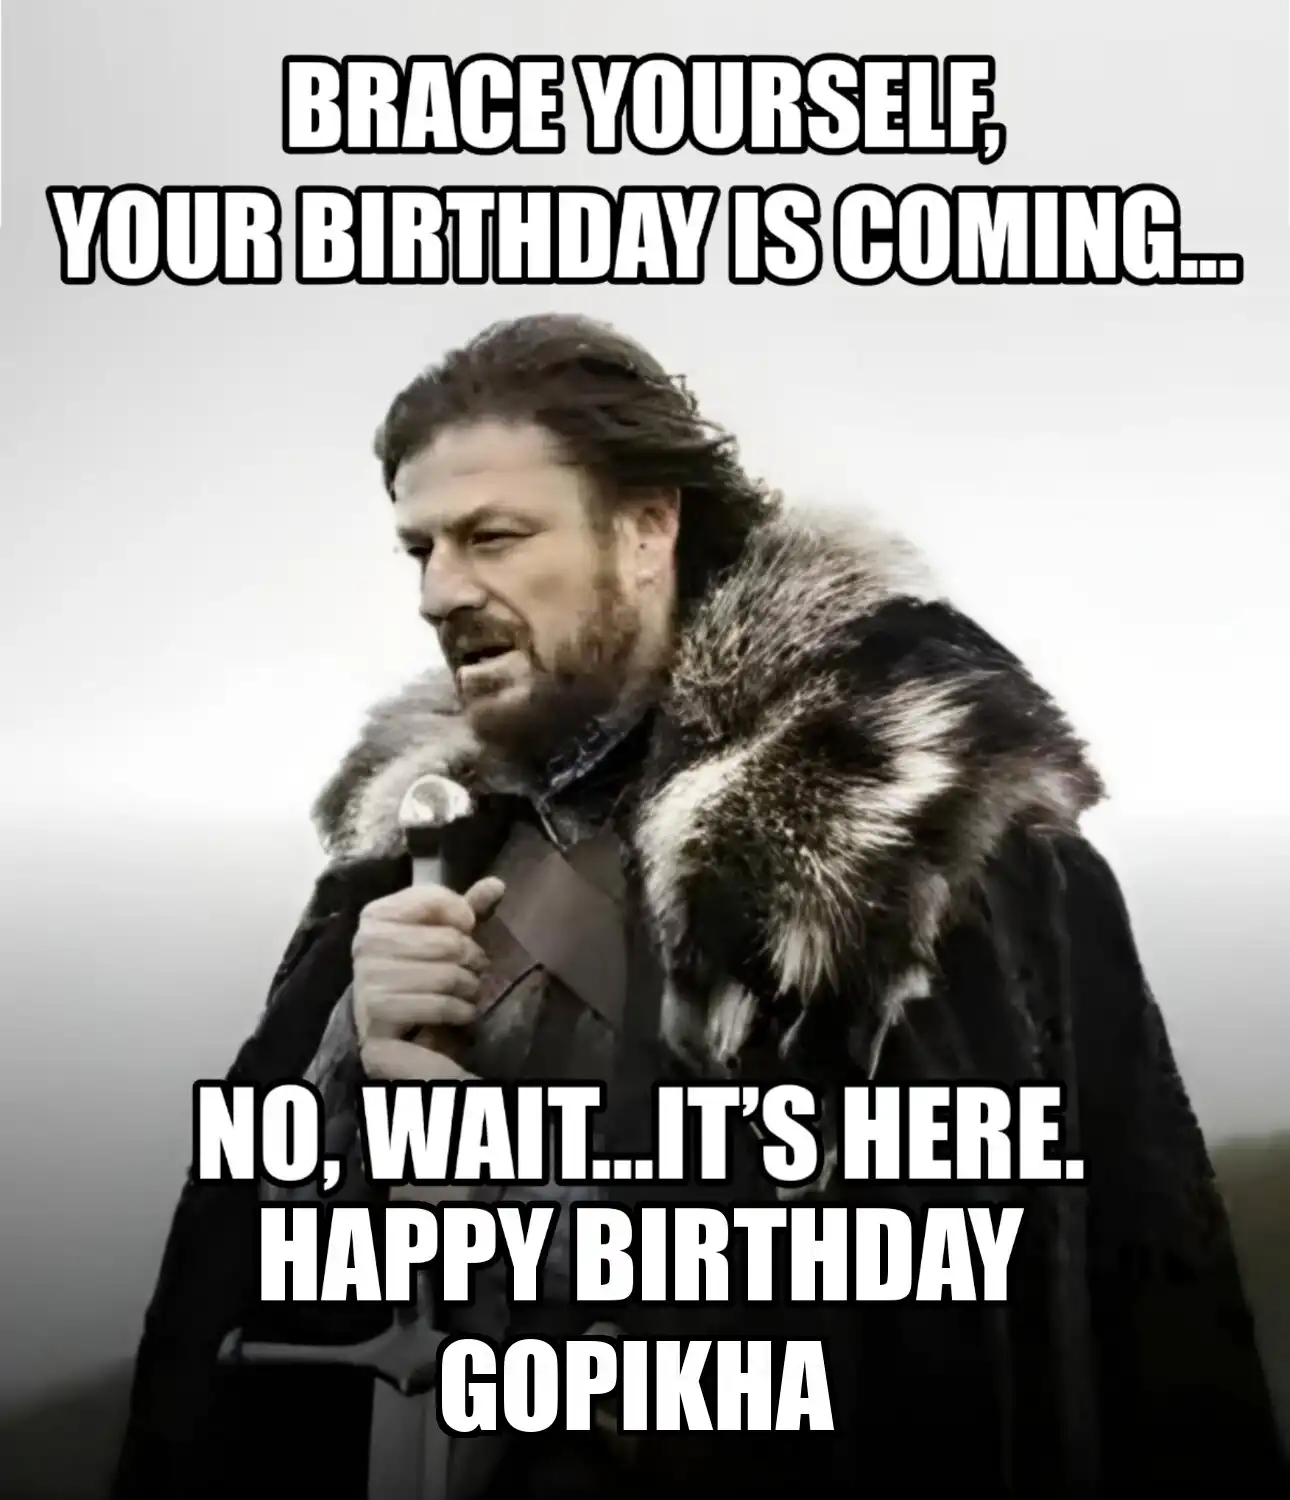 Happy Birthday Gopikha Brace Yourself Your Birthday Is Coming Meme